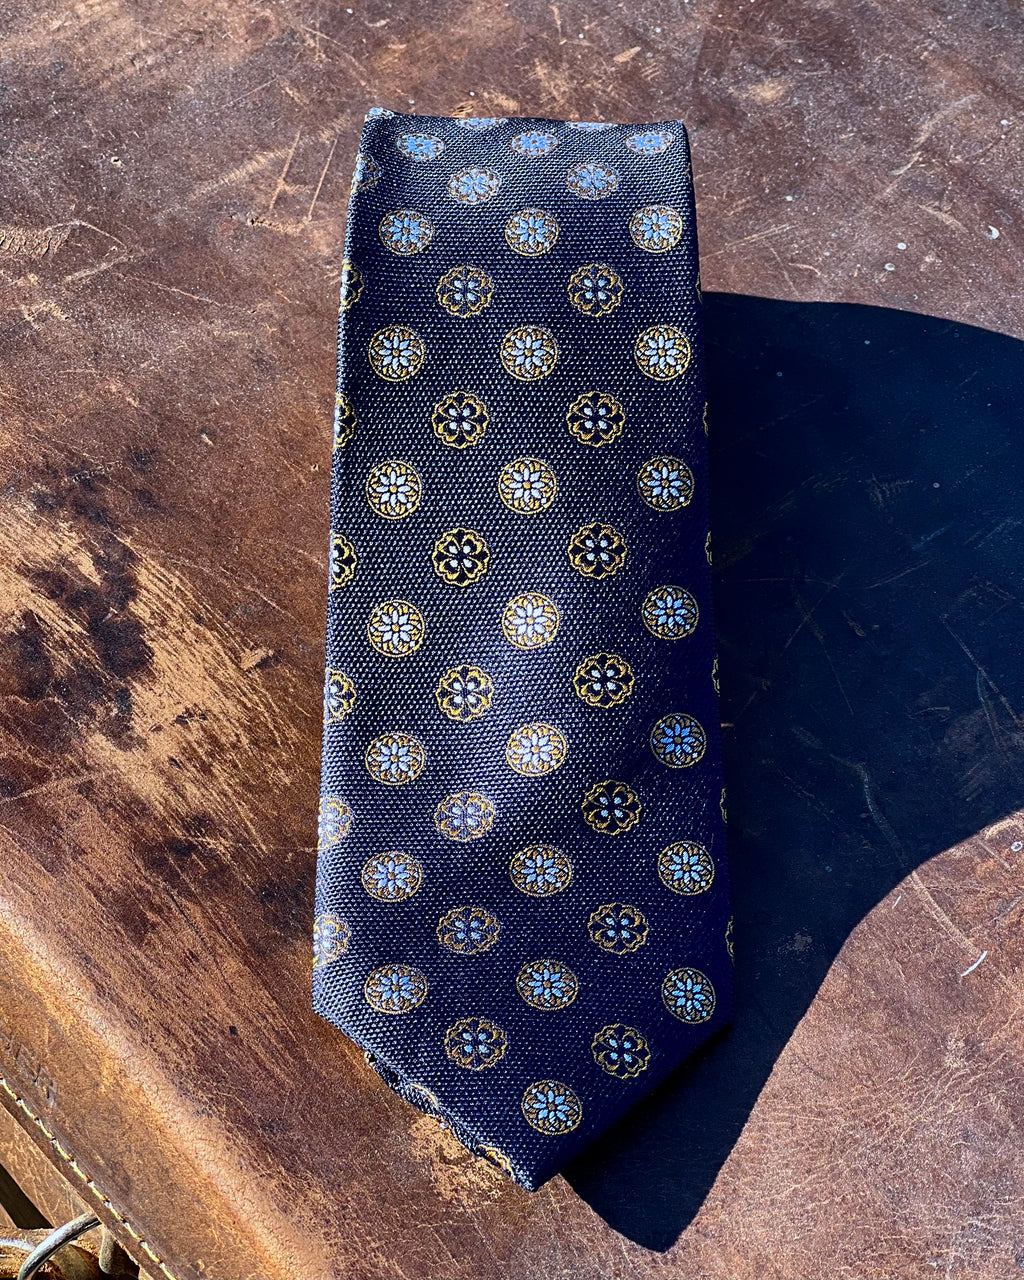 Silk Tie featuring flower mandala pattern